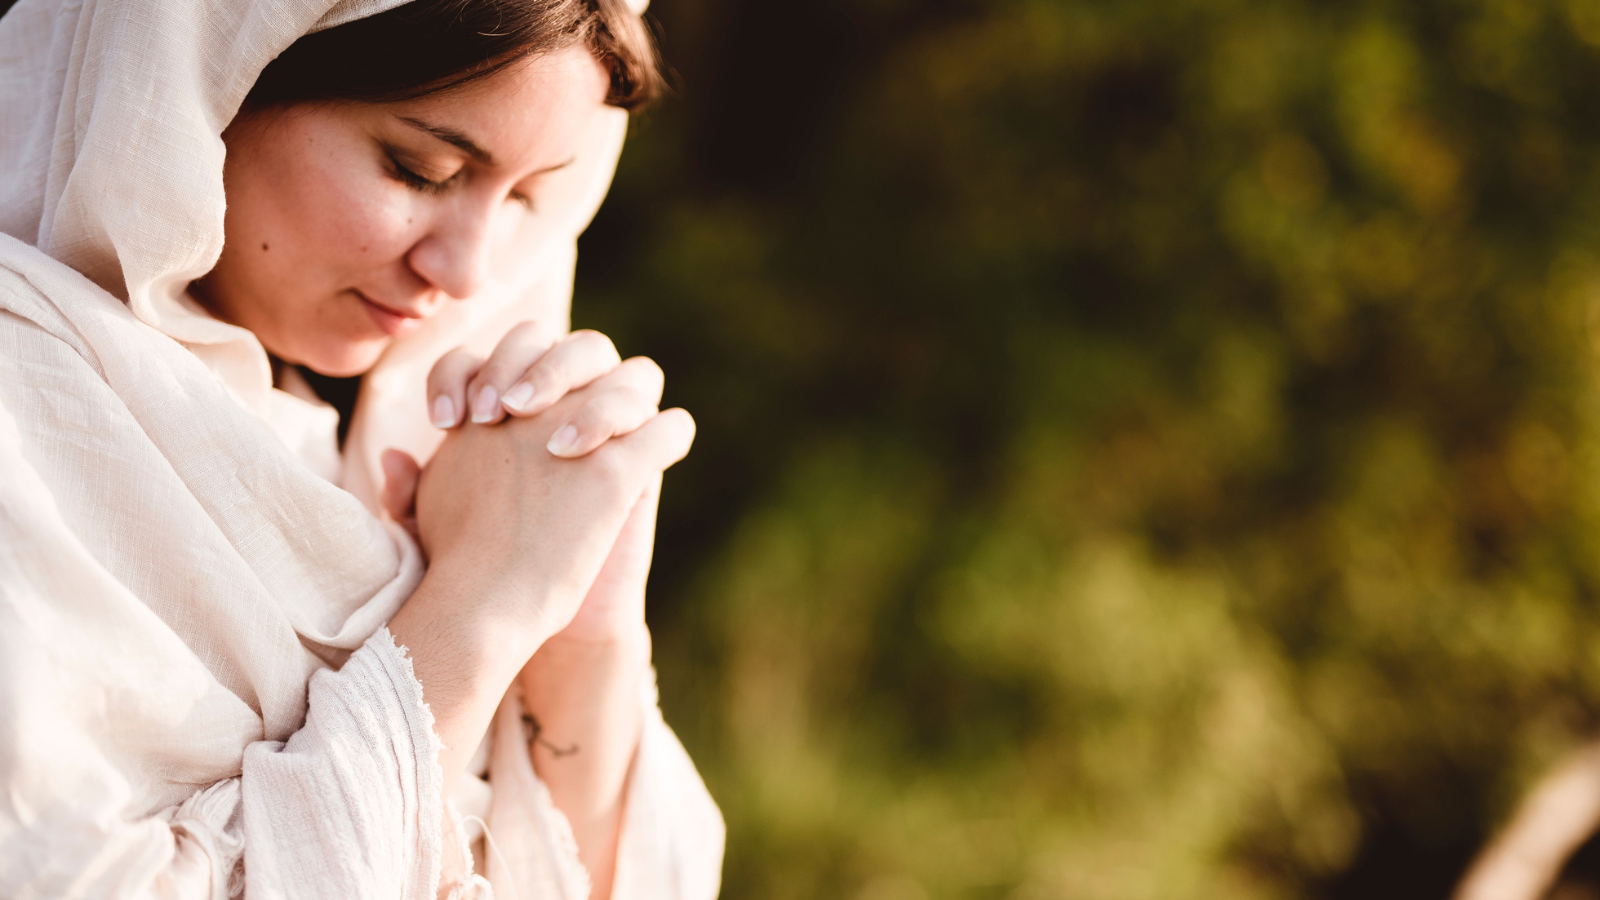 A woman wearing a white cloak and praying.